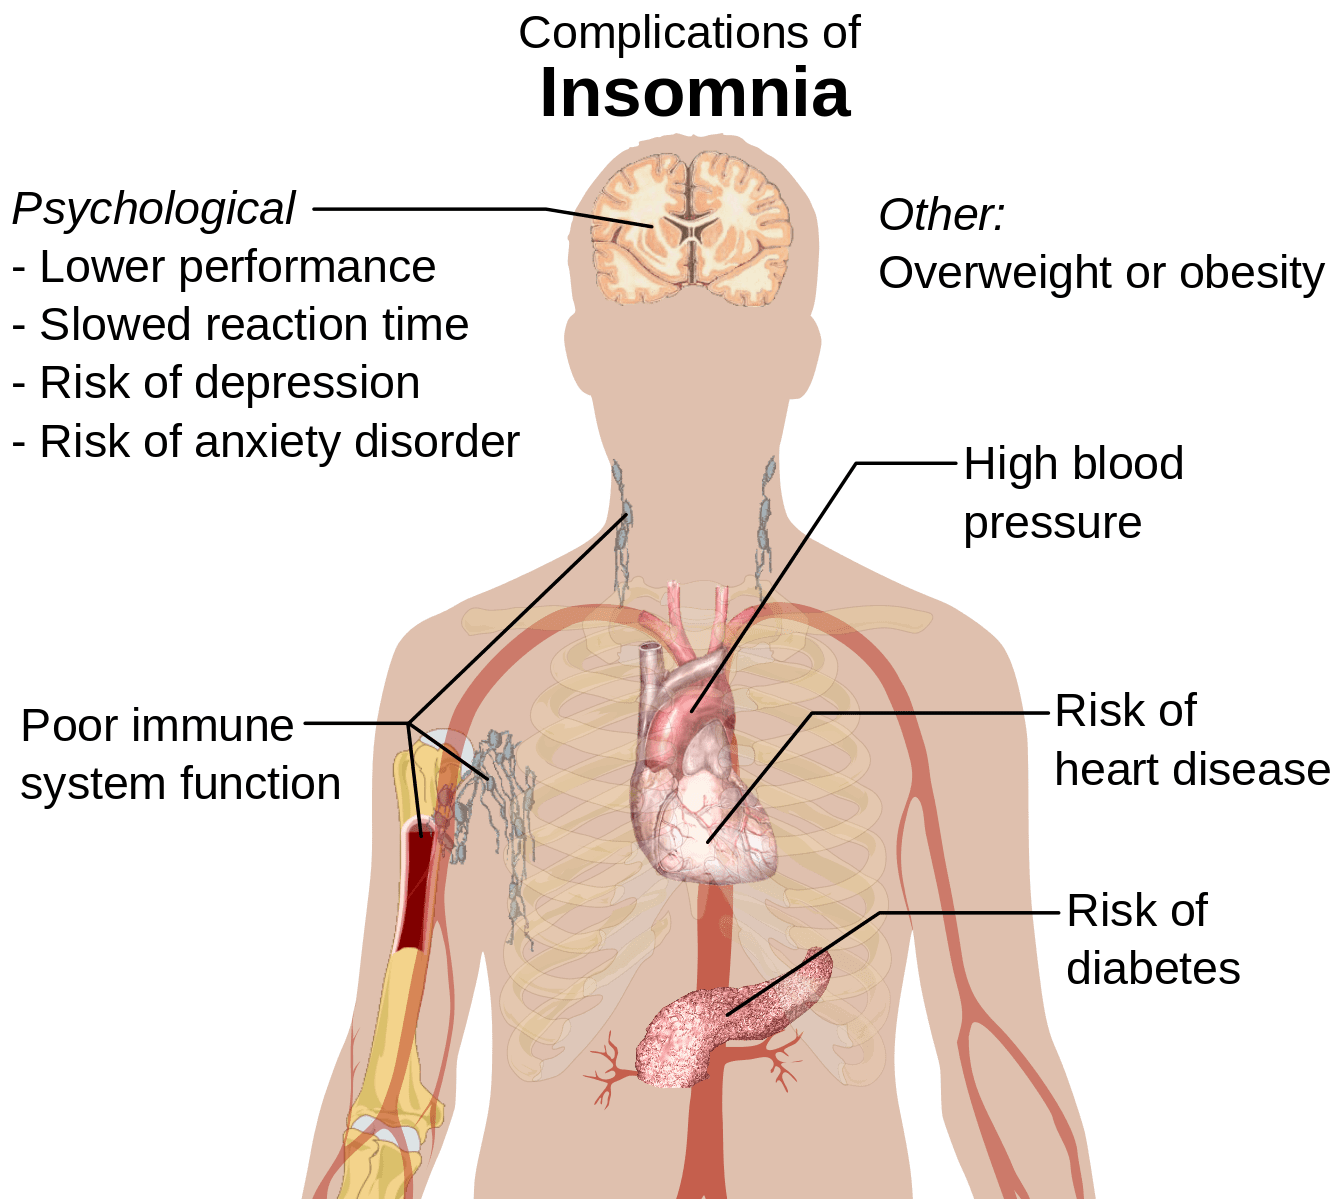 Insomnia - list of complications